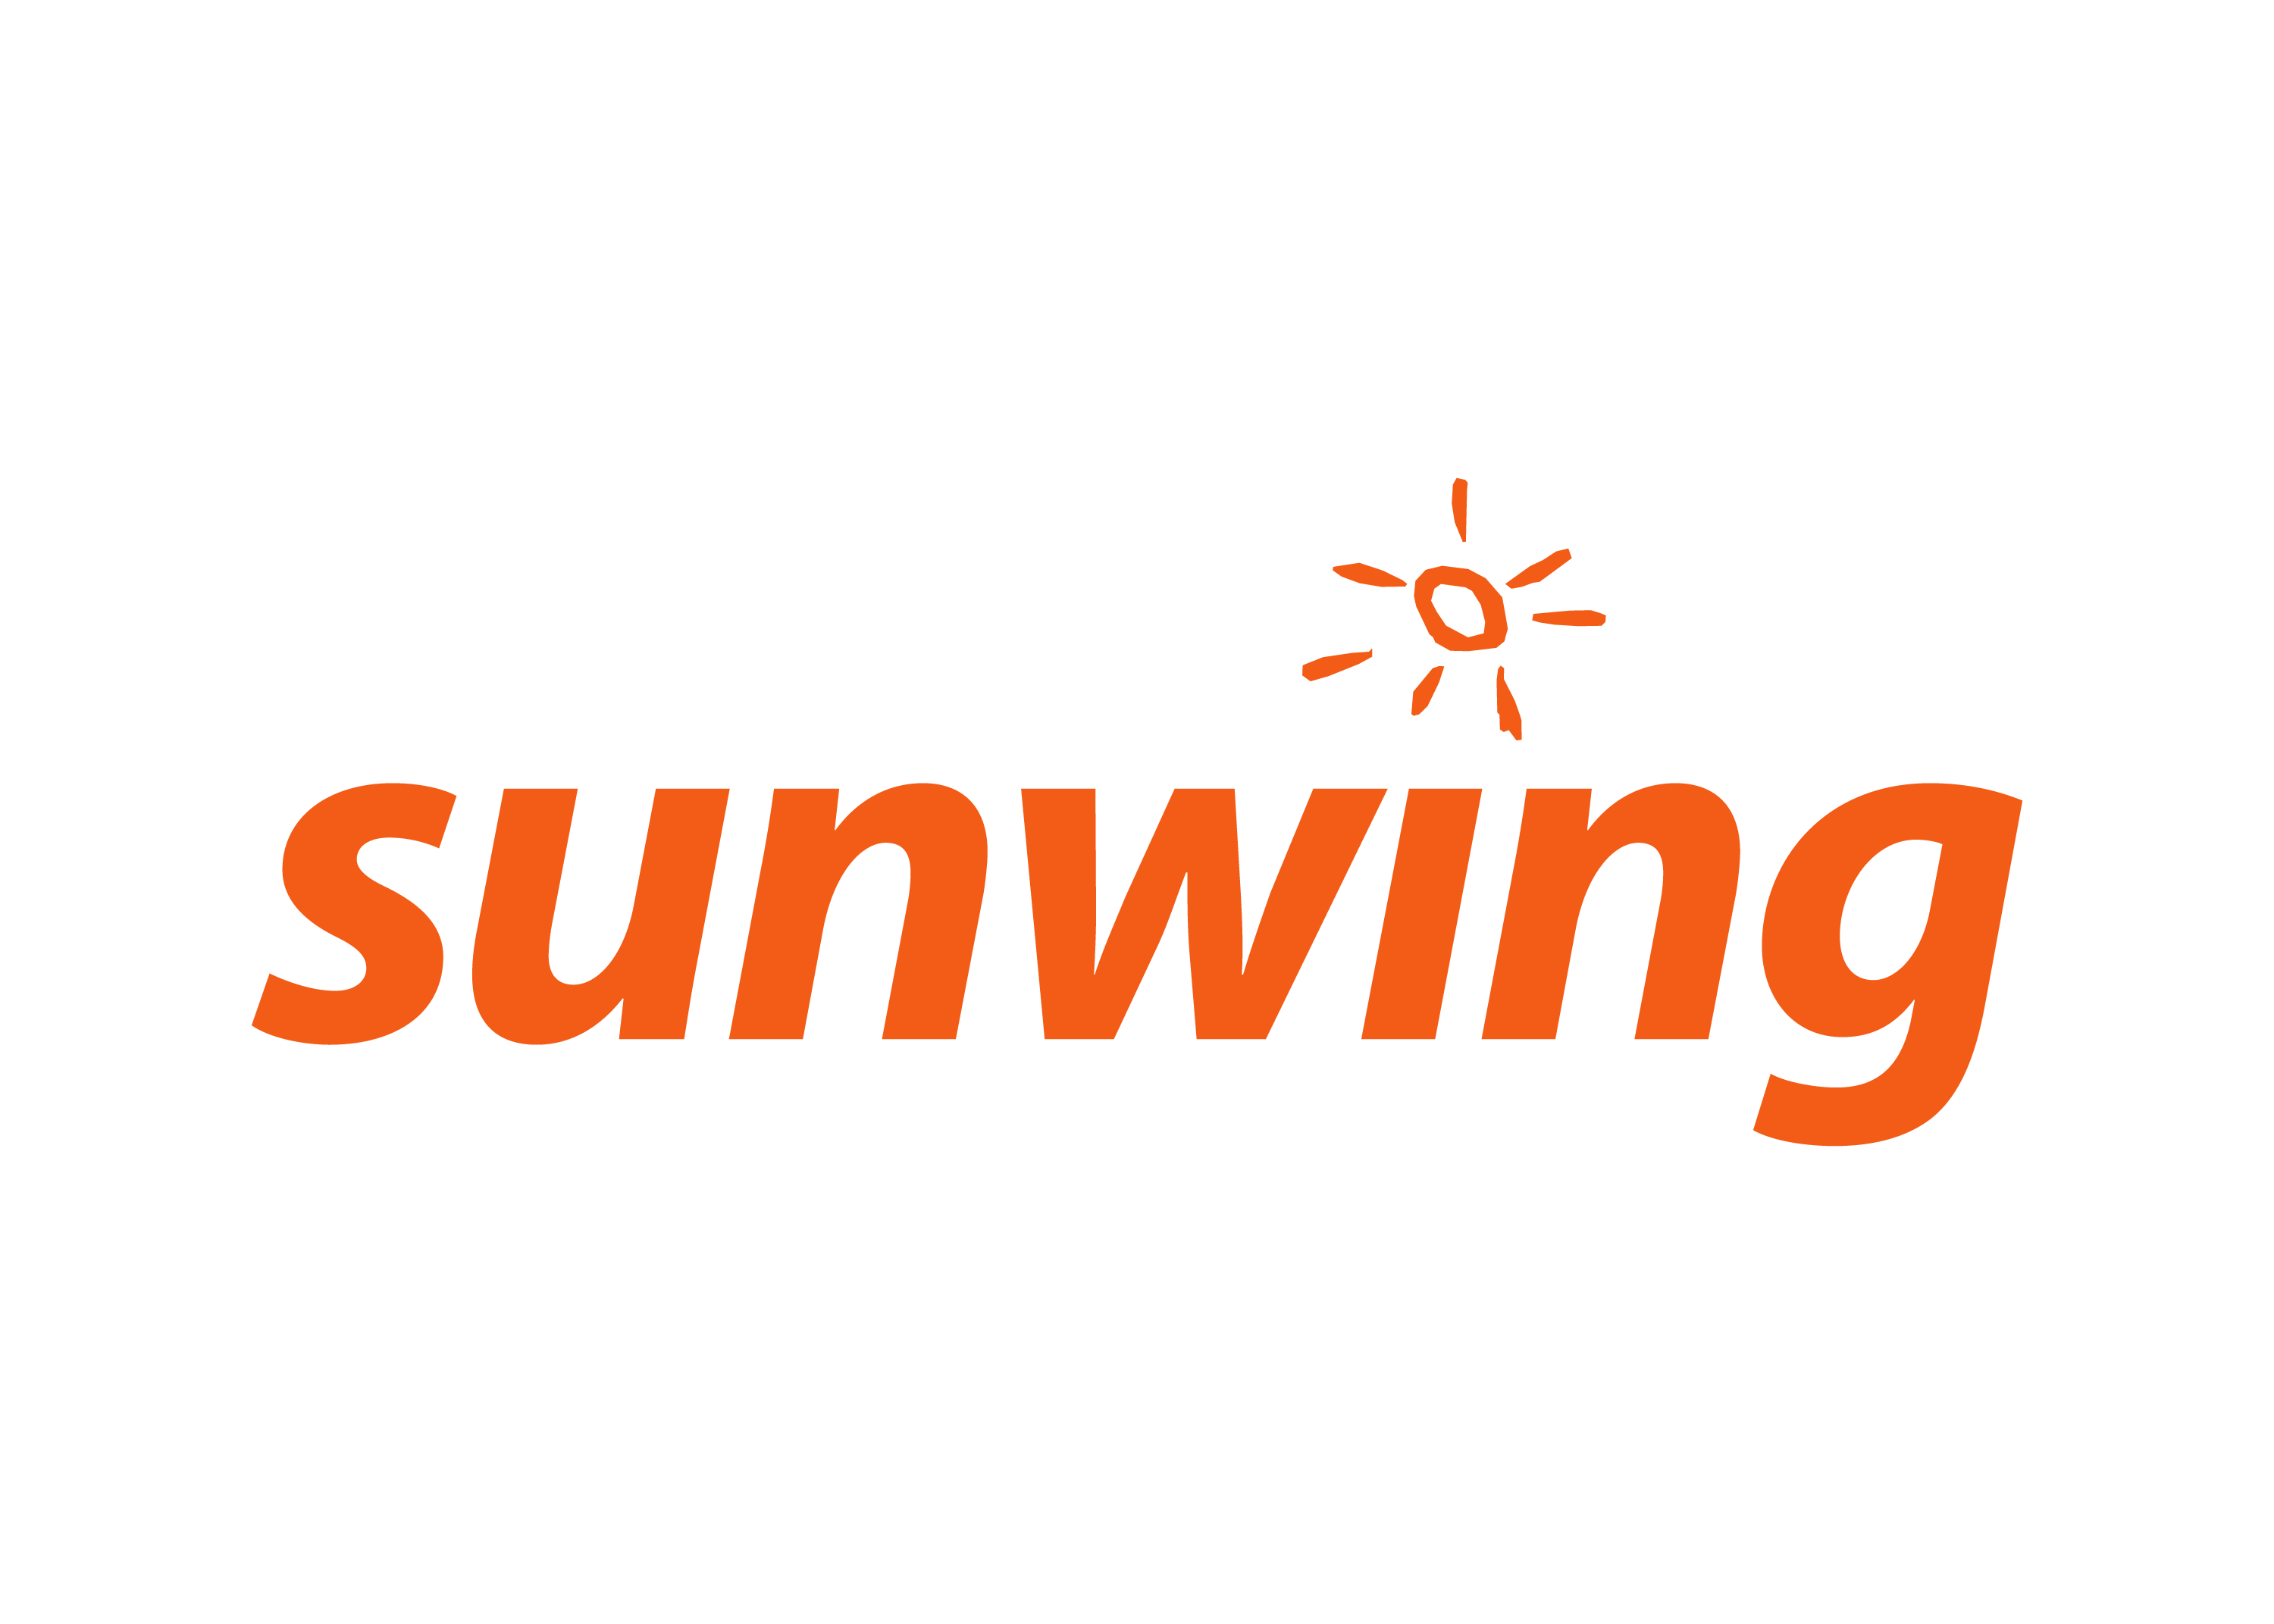 Sunwing